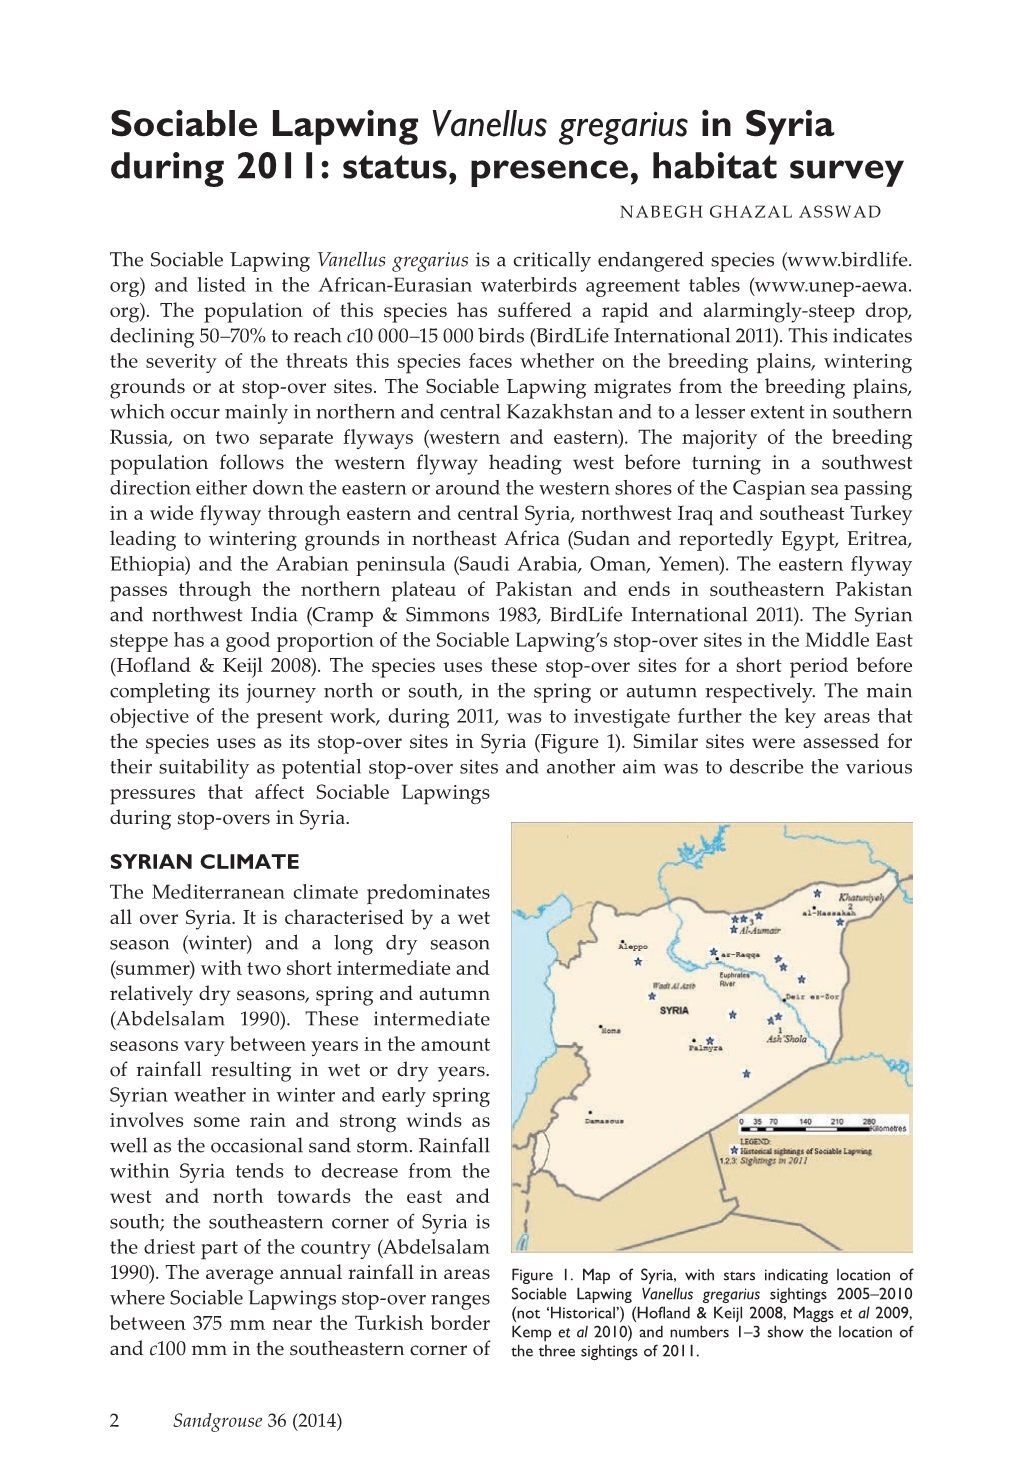 Sociable Lapwing Vanellus Gregarius in Syria During 2011: Status, Presence, Habitat Survey NABEGH GHAZAL ASSWAD